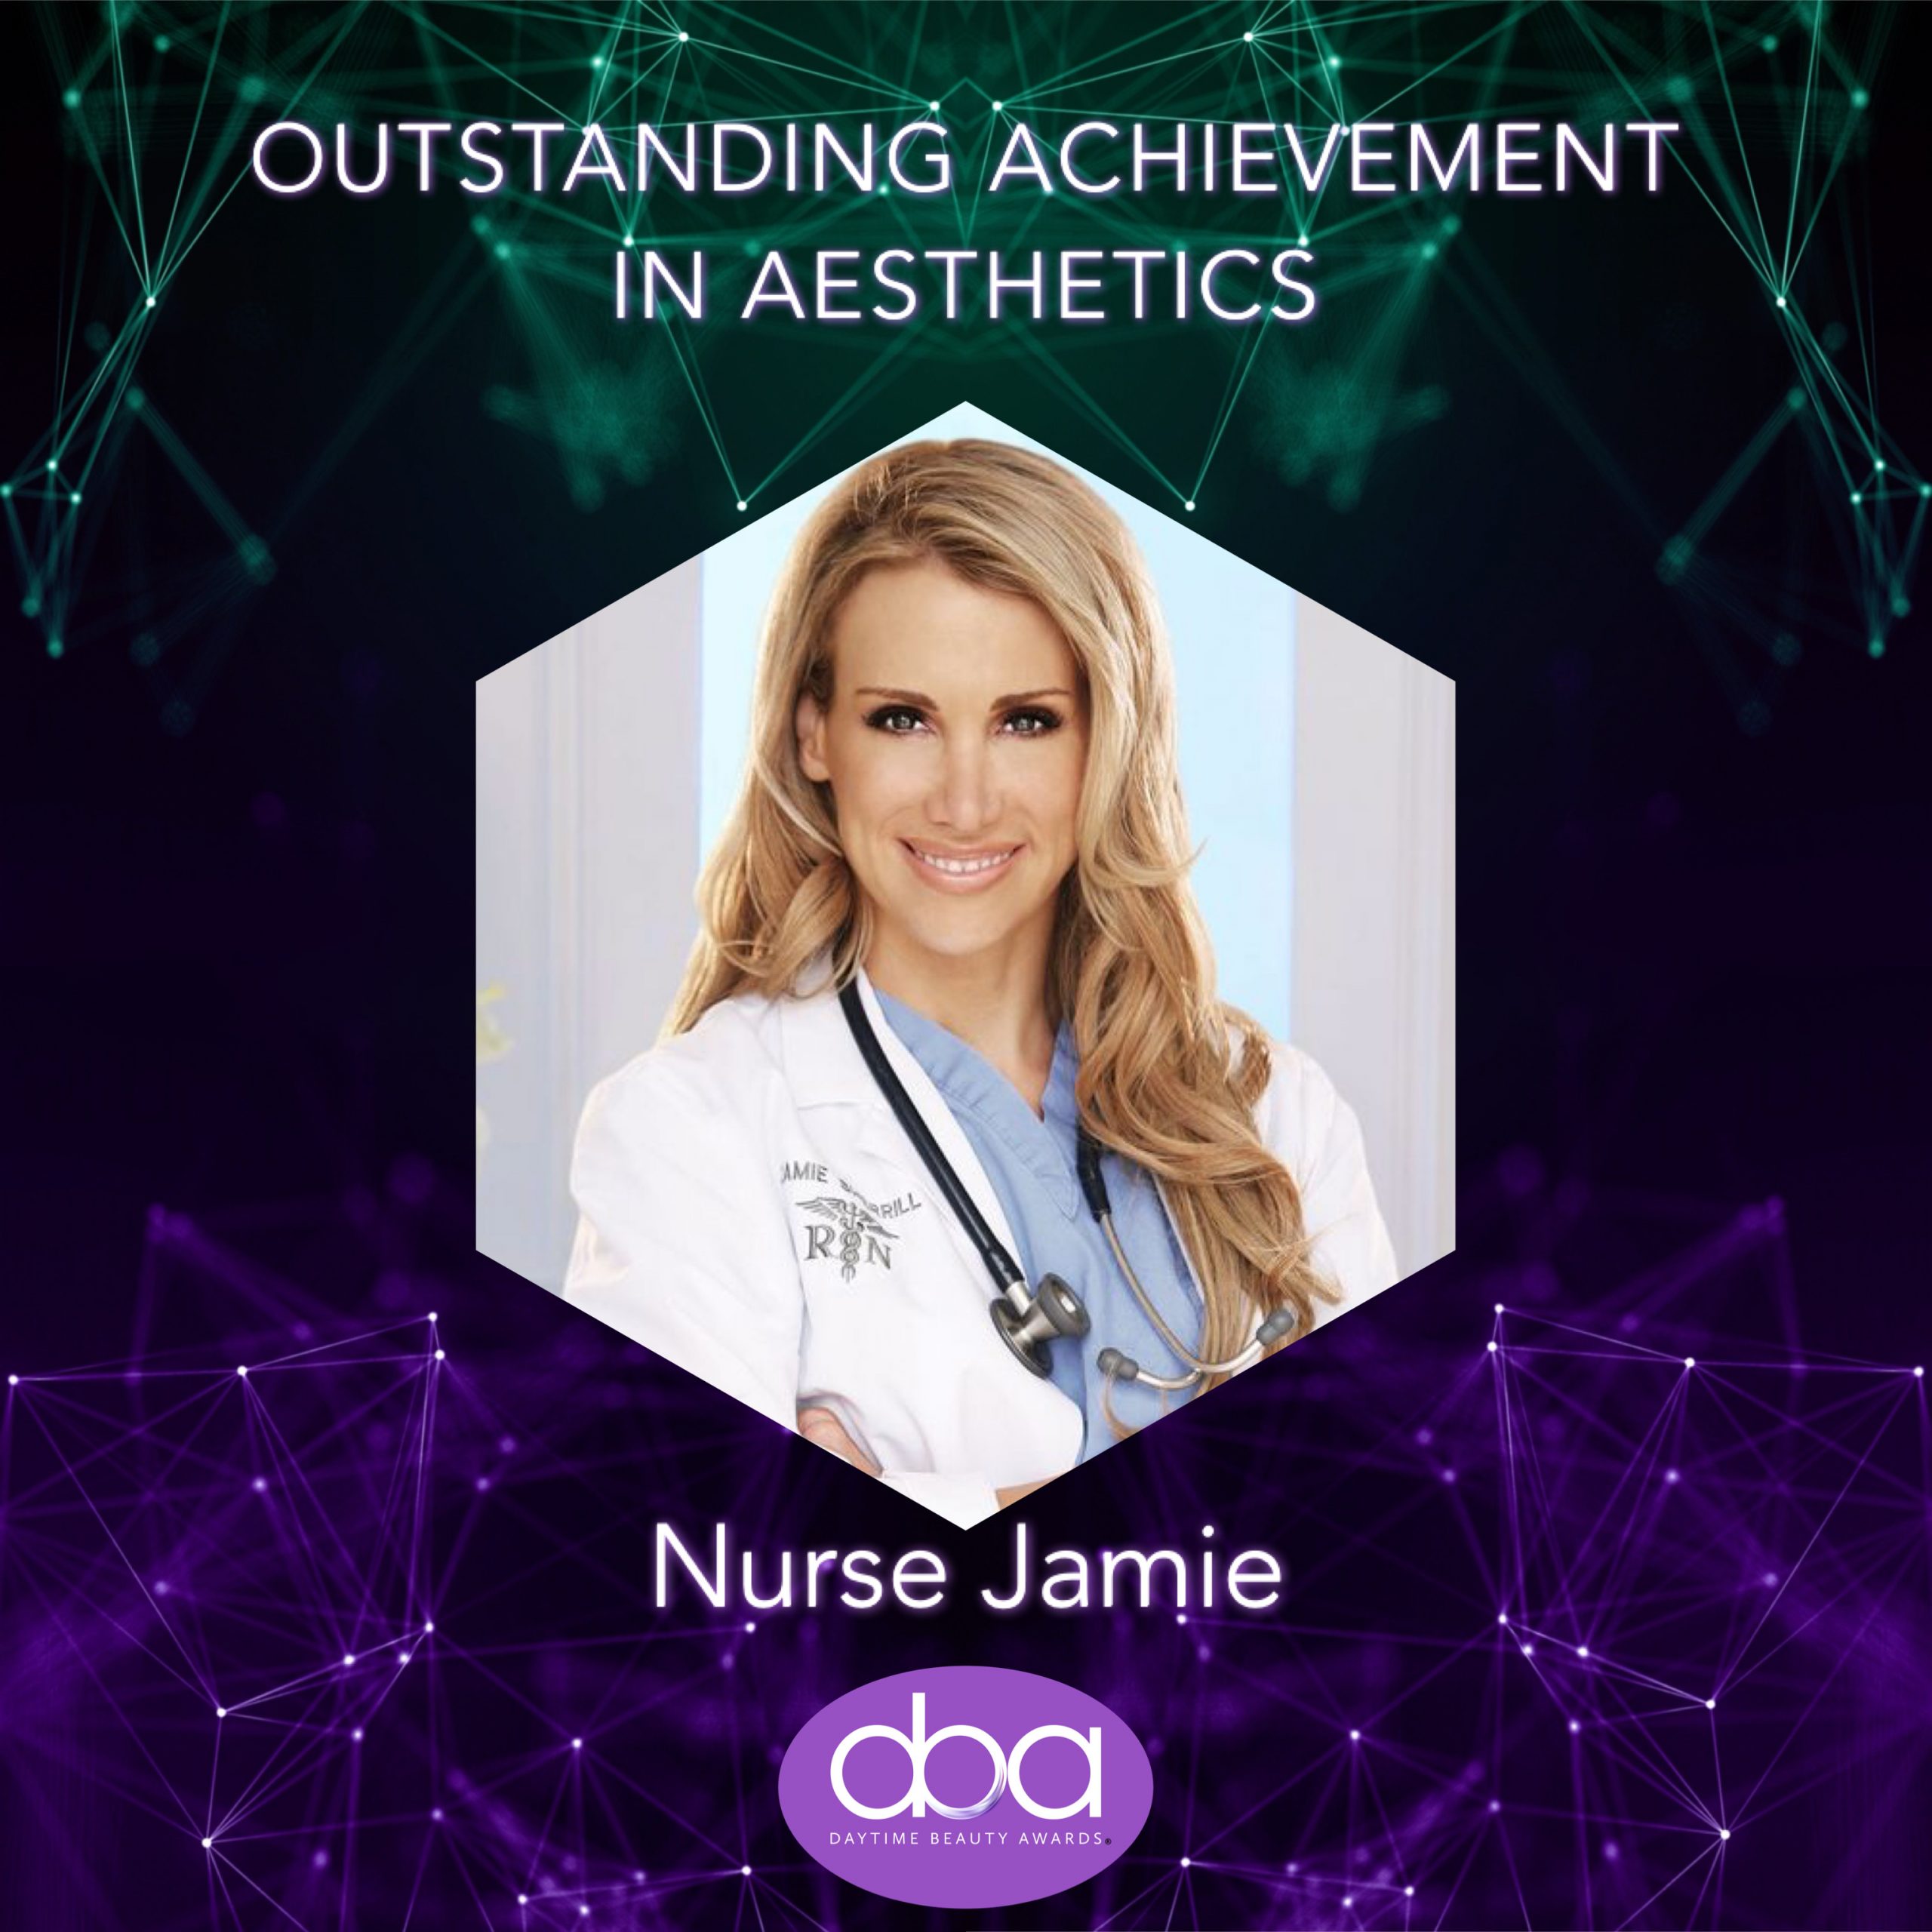 nurse jamie, daytime beauty awards, honoree award, aesthetics